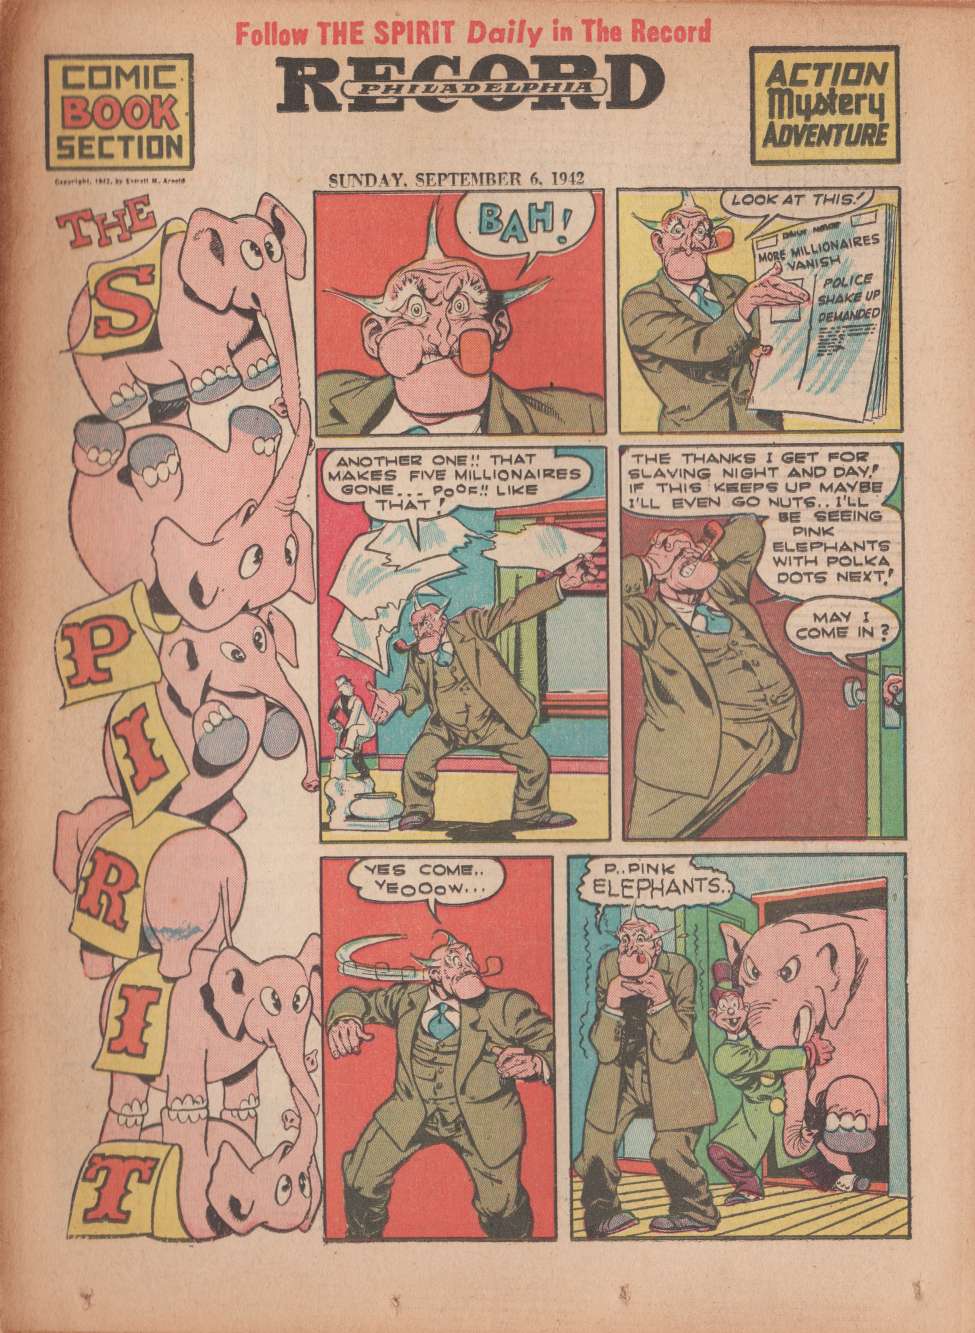 Comic Book Cover For The Spirit (1942-09-06) - Philadelphia Record